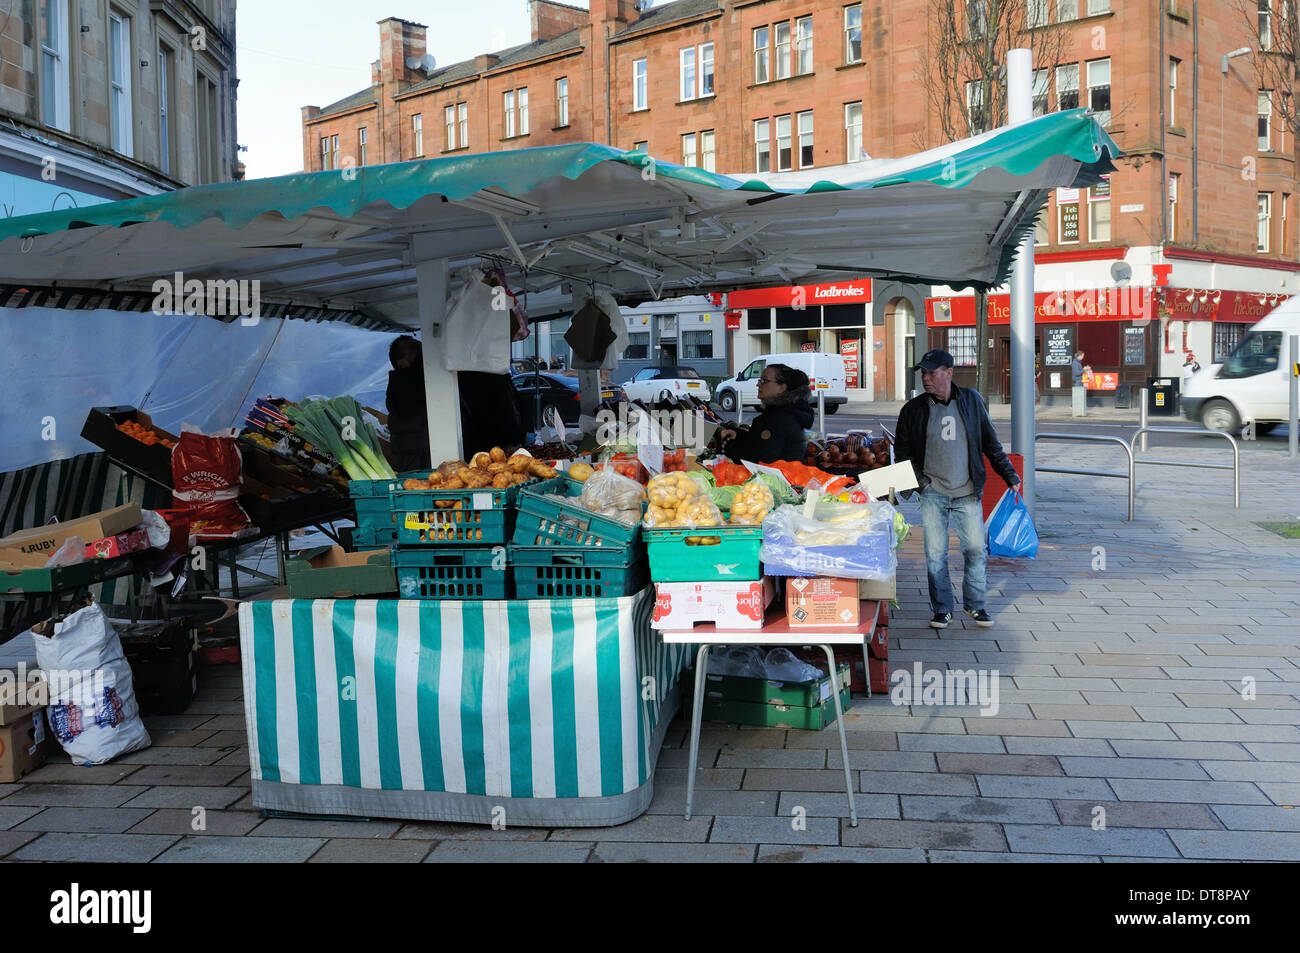 Fruit and veg stall in Bridgeton, Glasgow, Scotland, UK Stock Photo